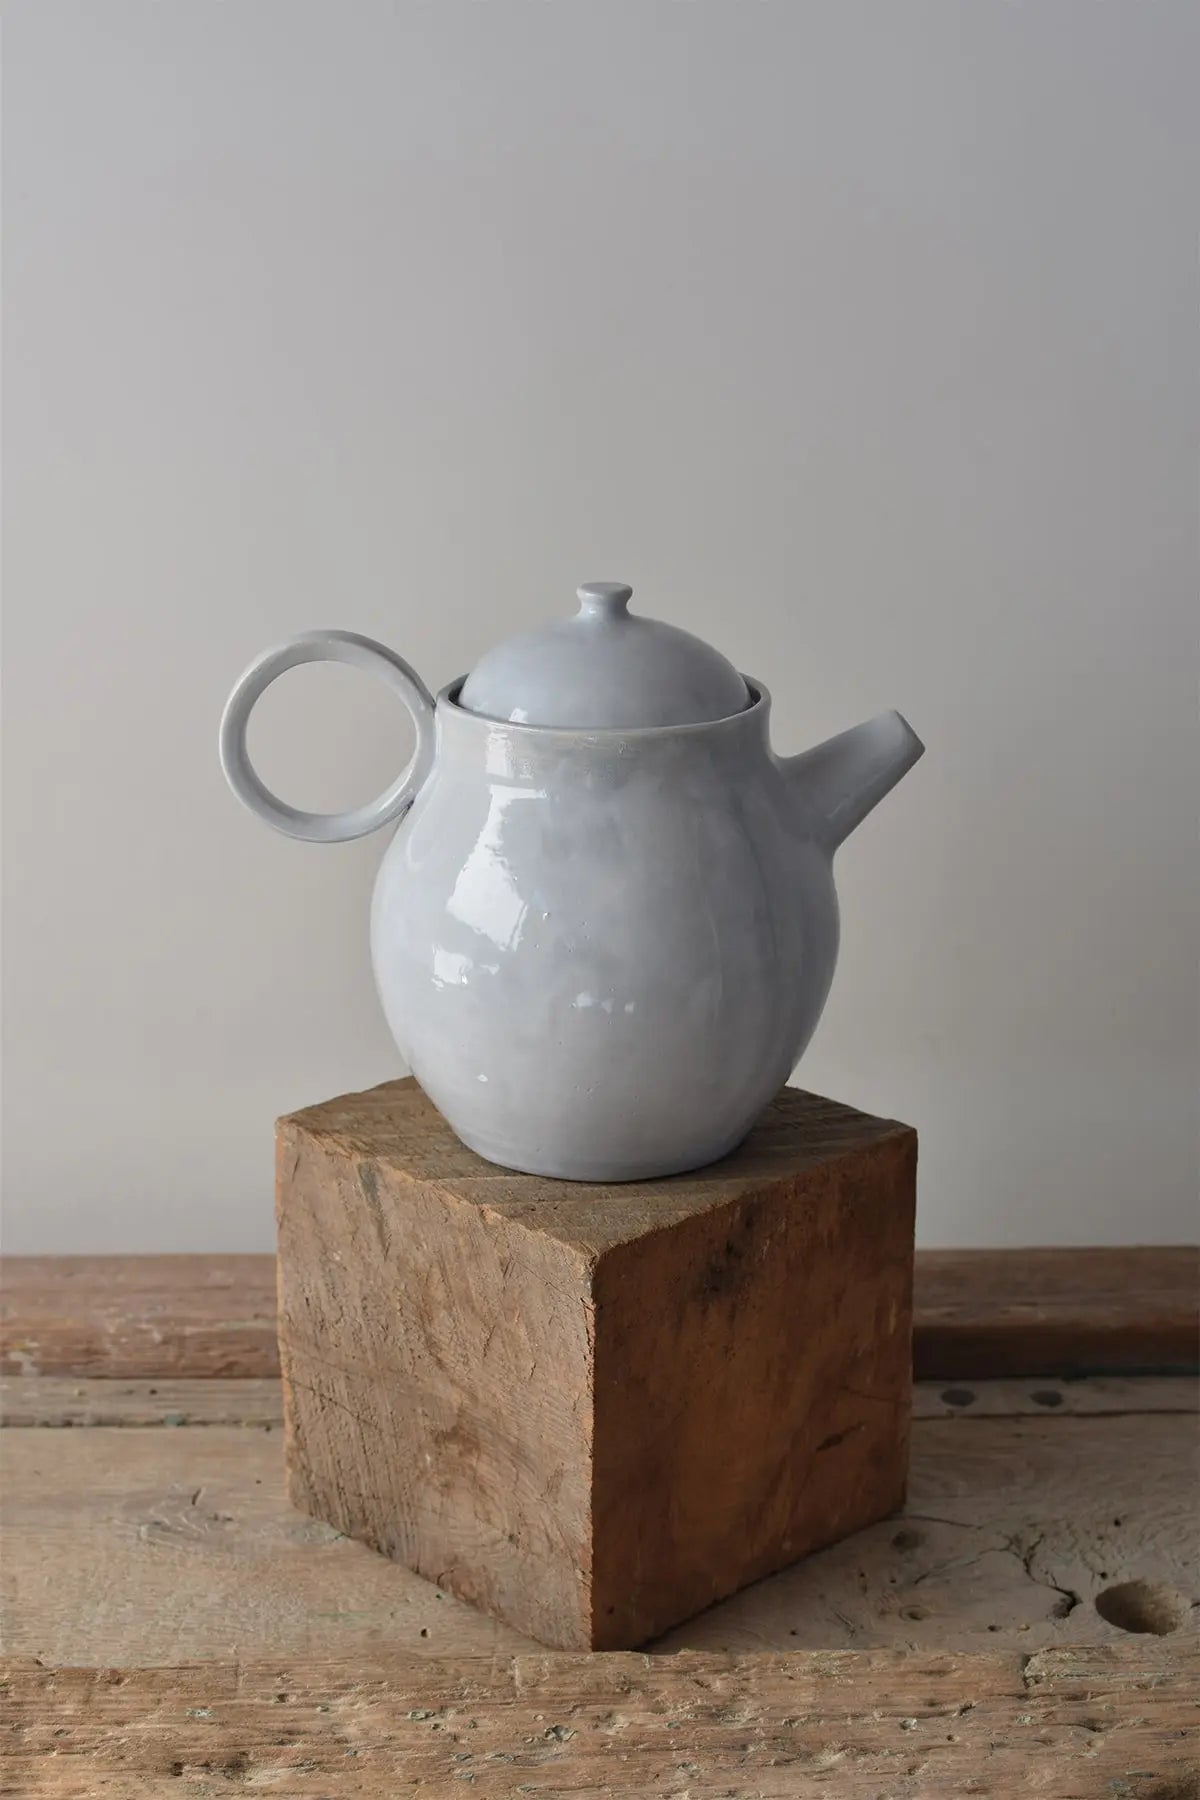 Bespoke ceramic teapots